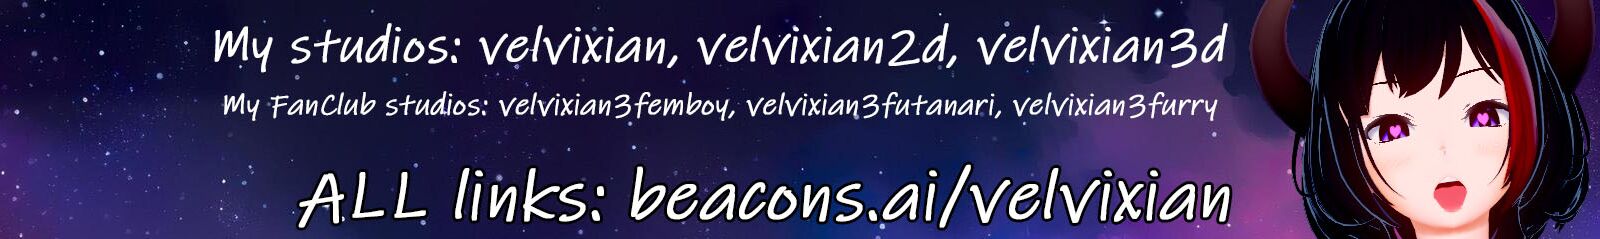 Velvixian_2D